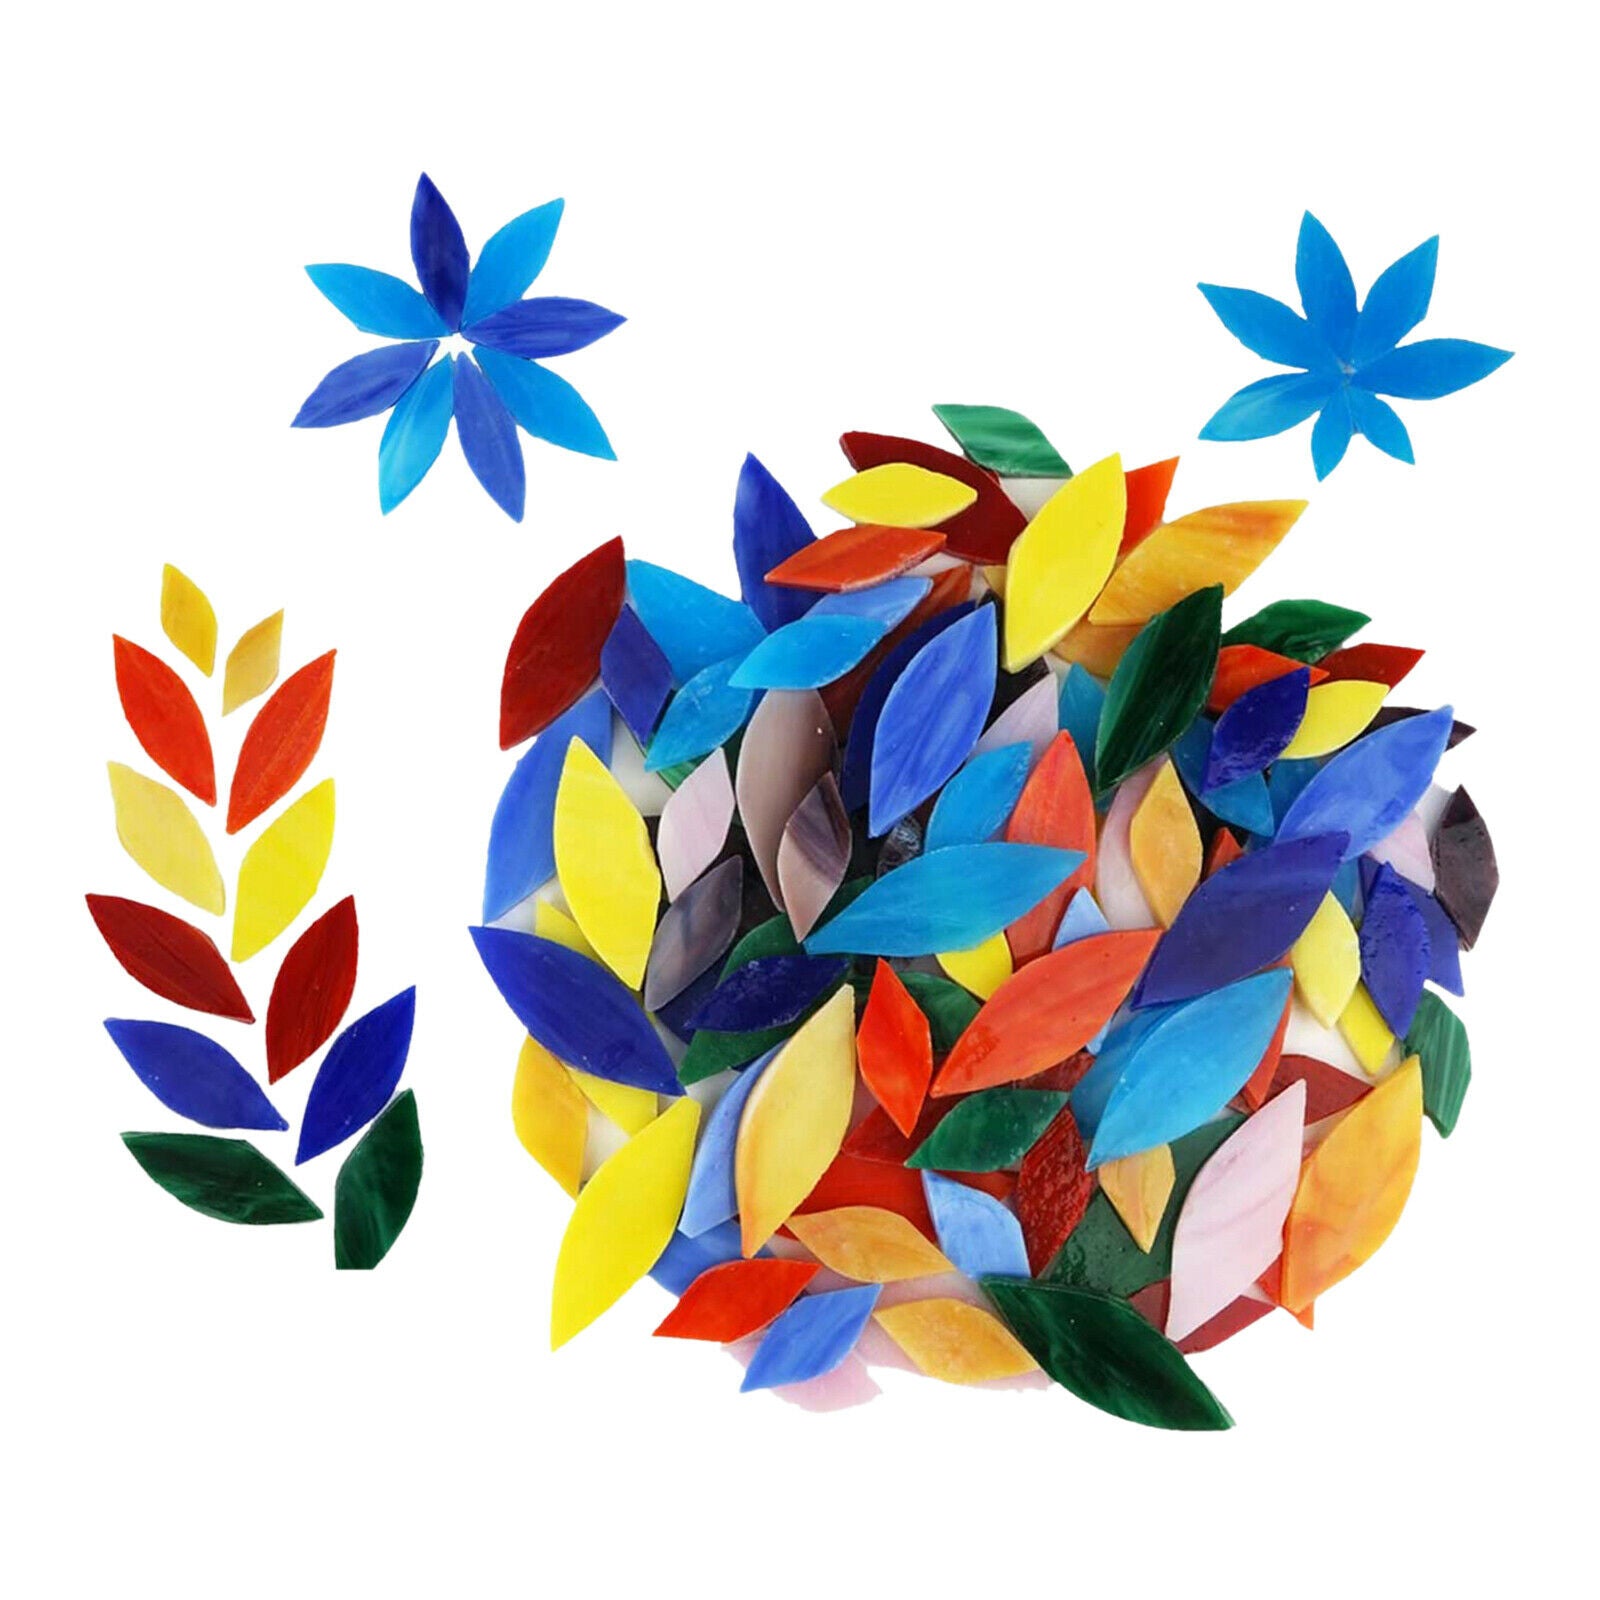 300 Pcs Assorted Colors Petal Mosaic Tiles Hand-Cut Stained Glass Pots